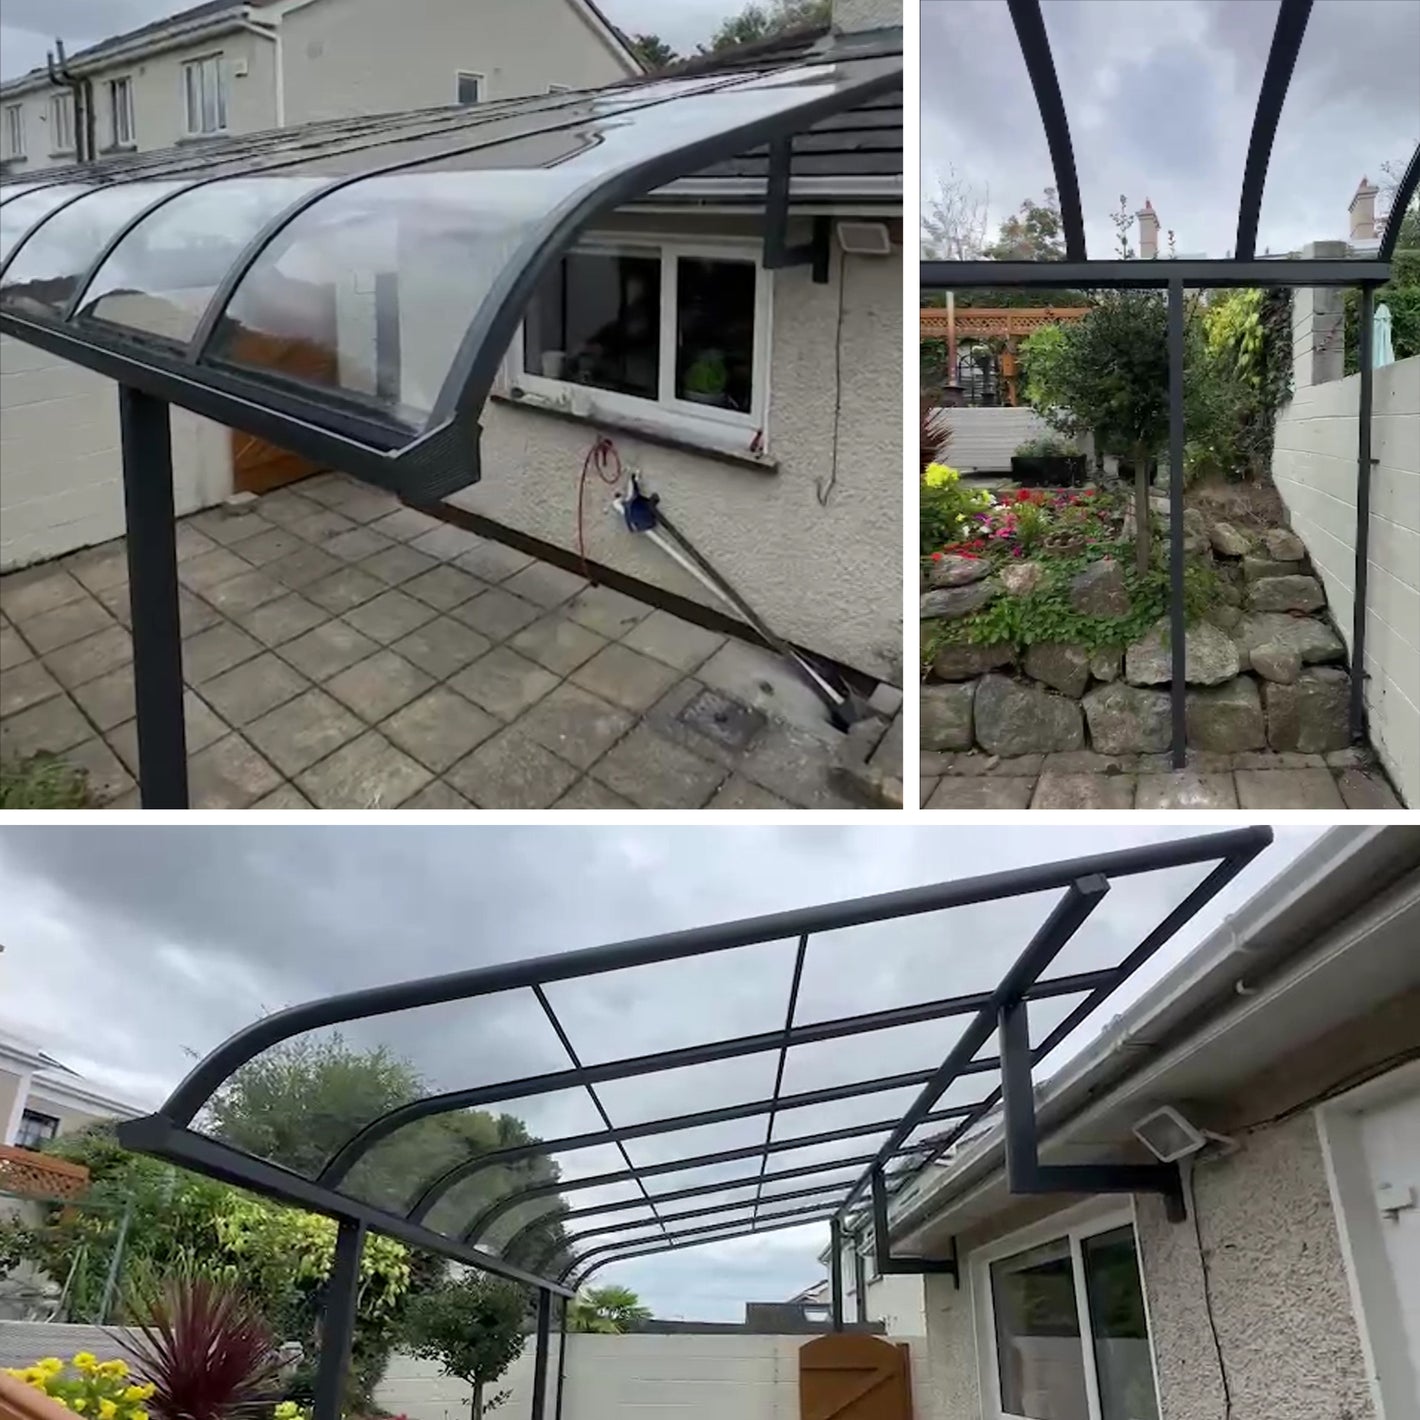 Aluminium canopy installed in Rathfarnham, Dublin 16